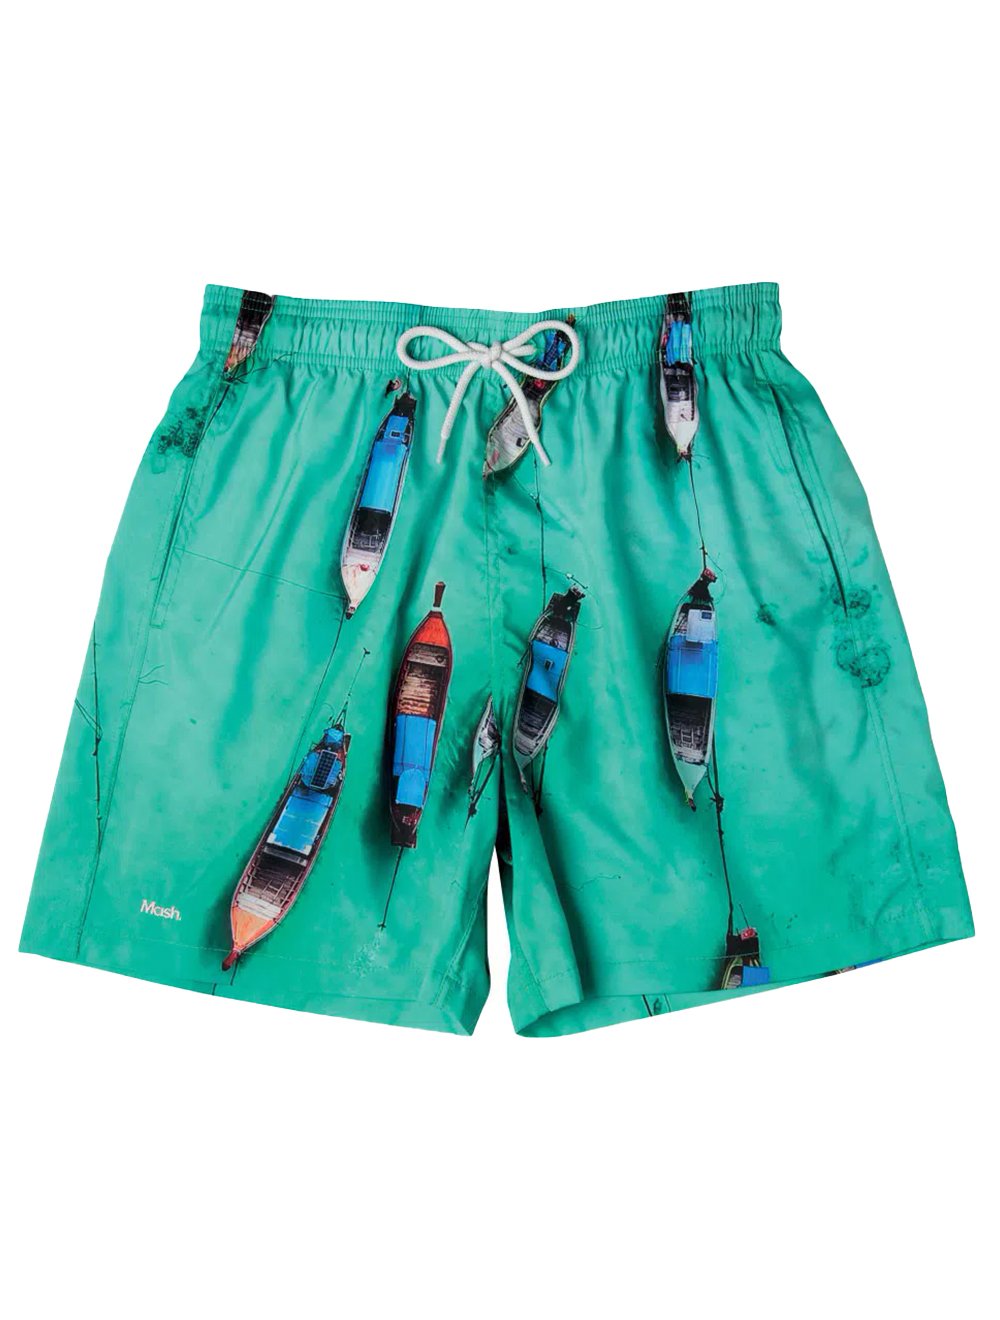 Short Mash Masculino Beachwear Sports Verde Claro